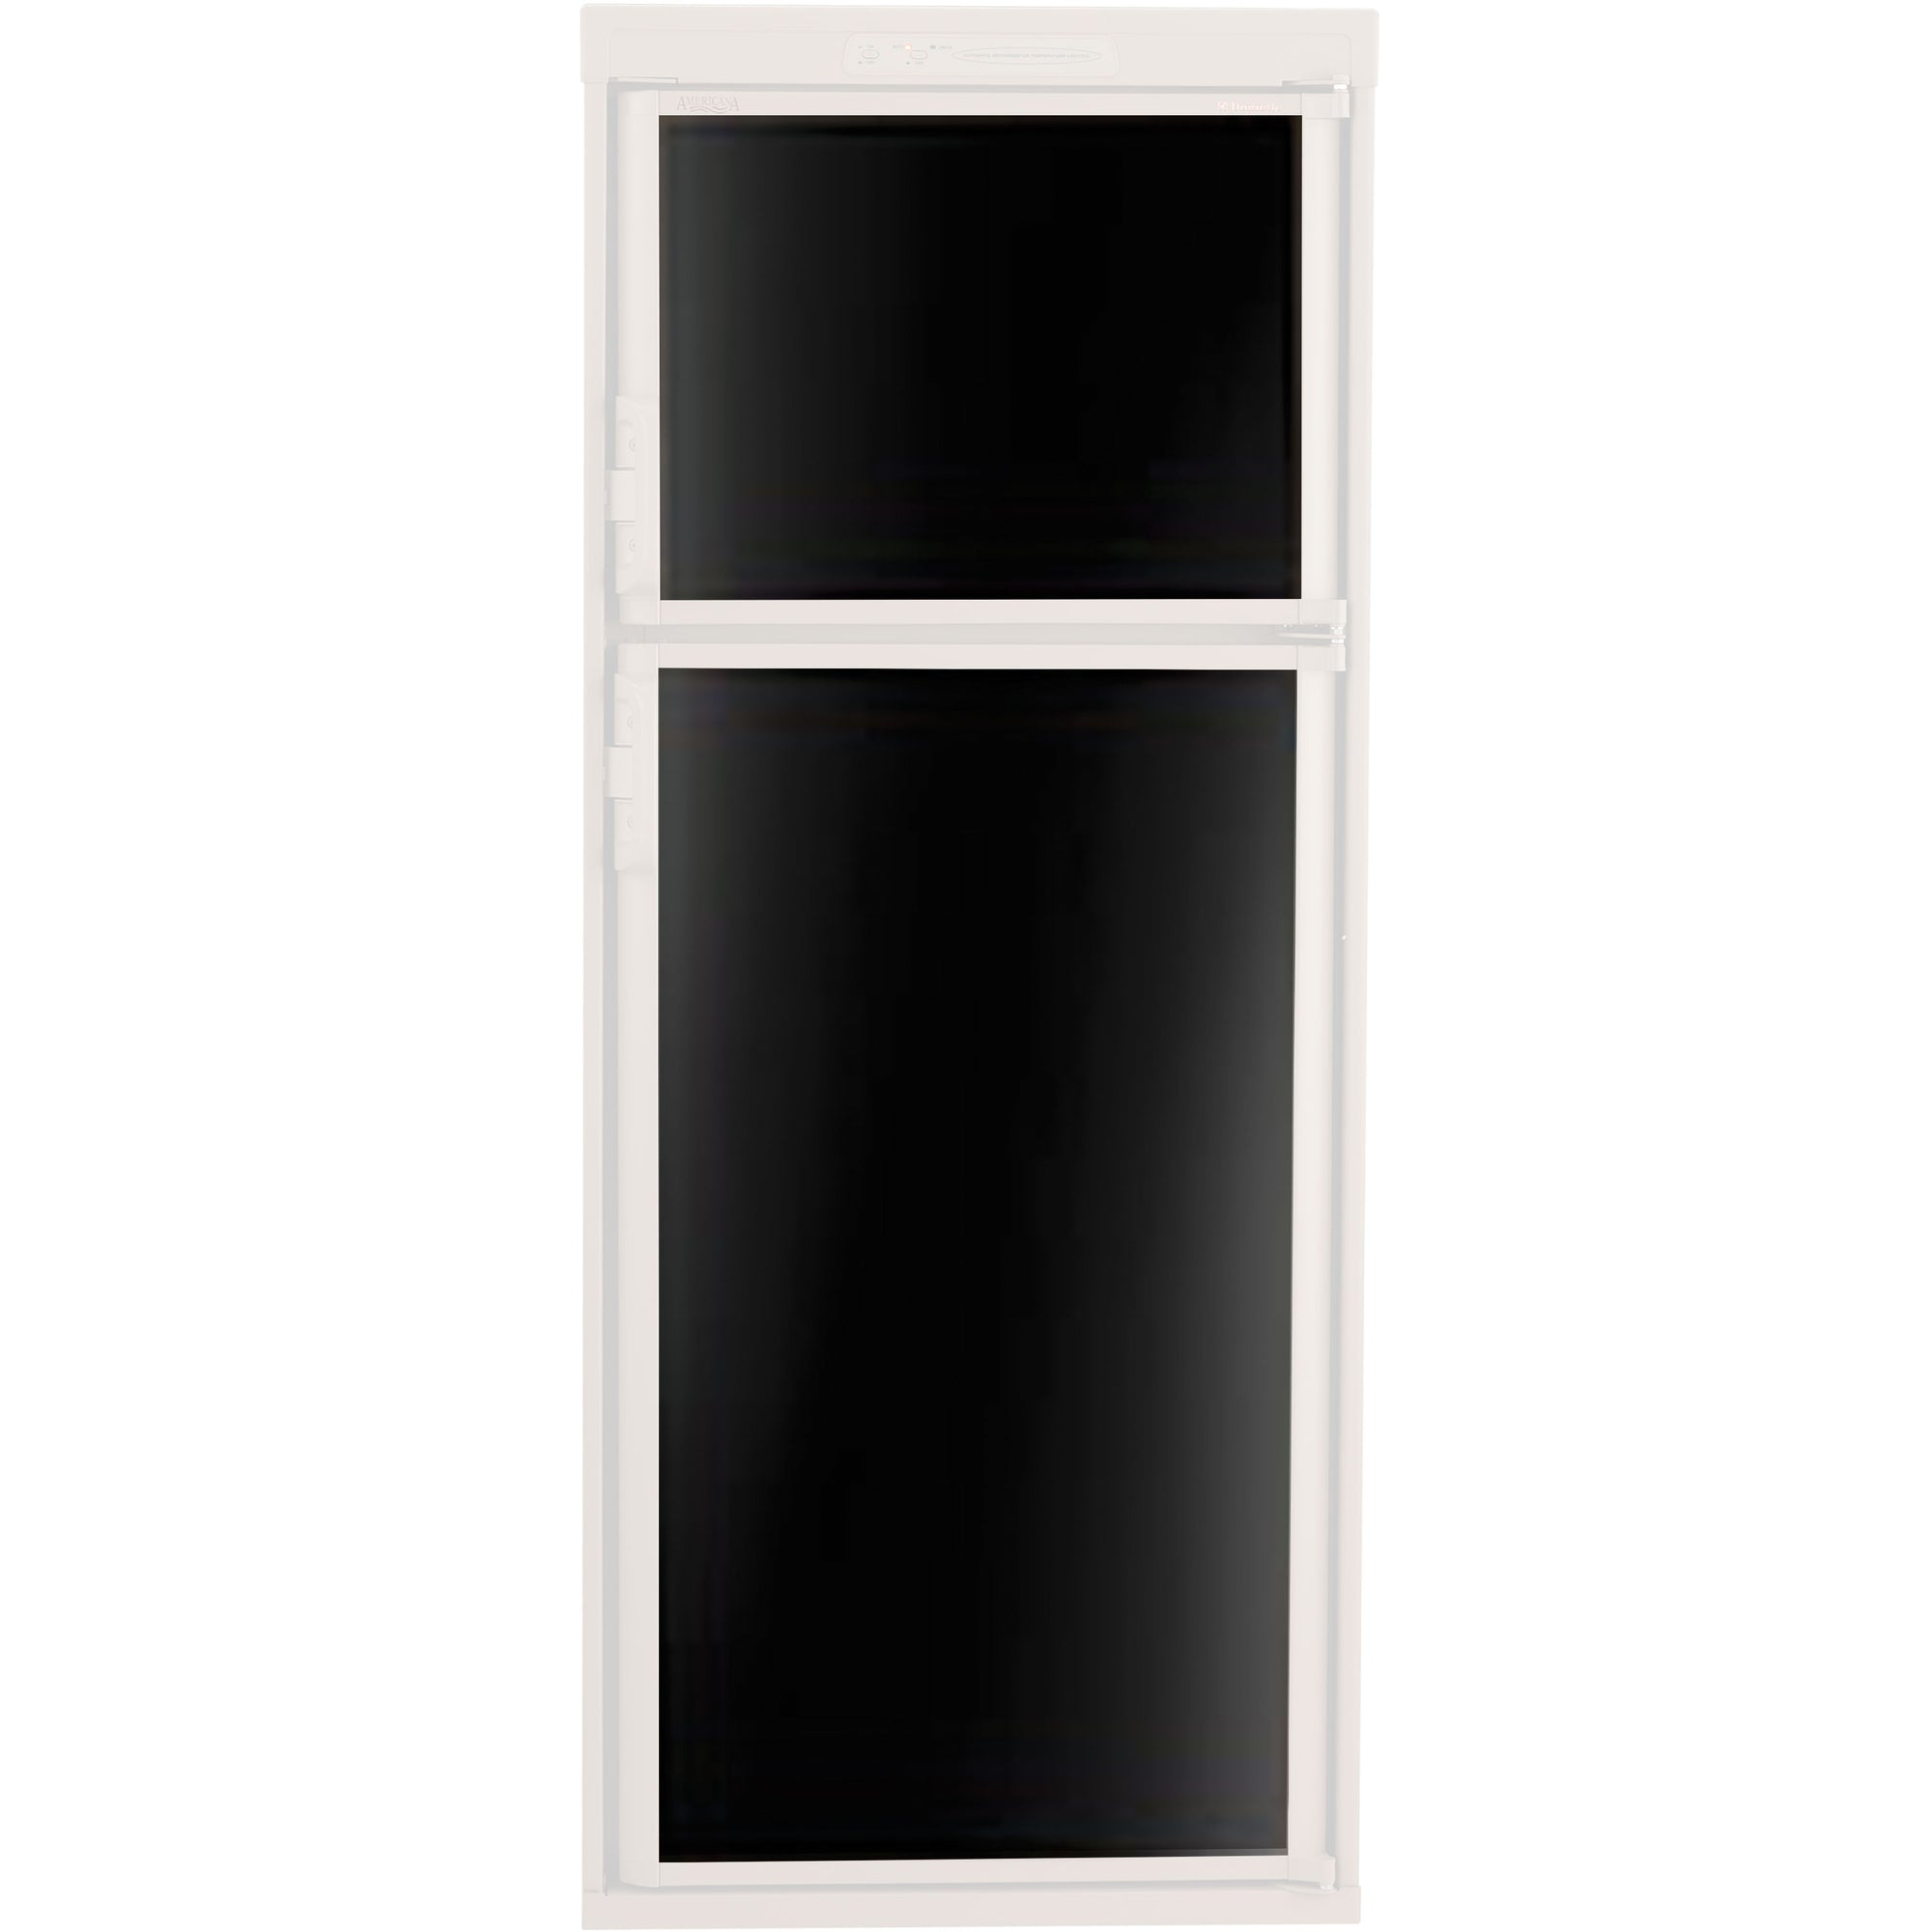 Dometic 3106863.131C Refrigerator Door Panel, Both Panels for 7732/7832 - Black Acrylic